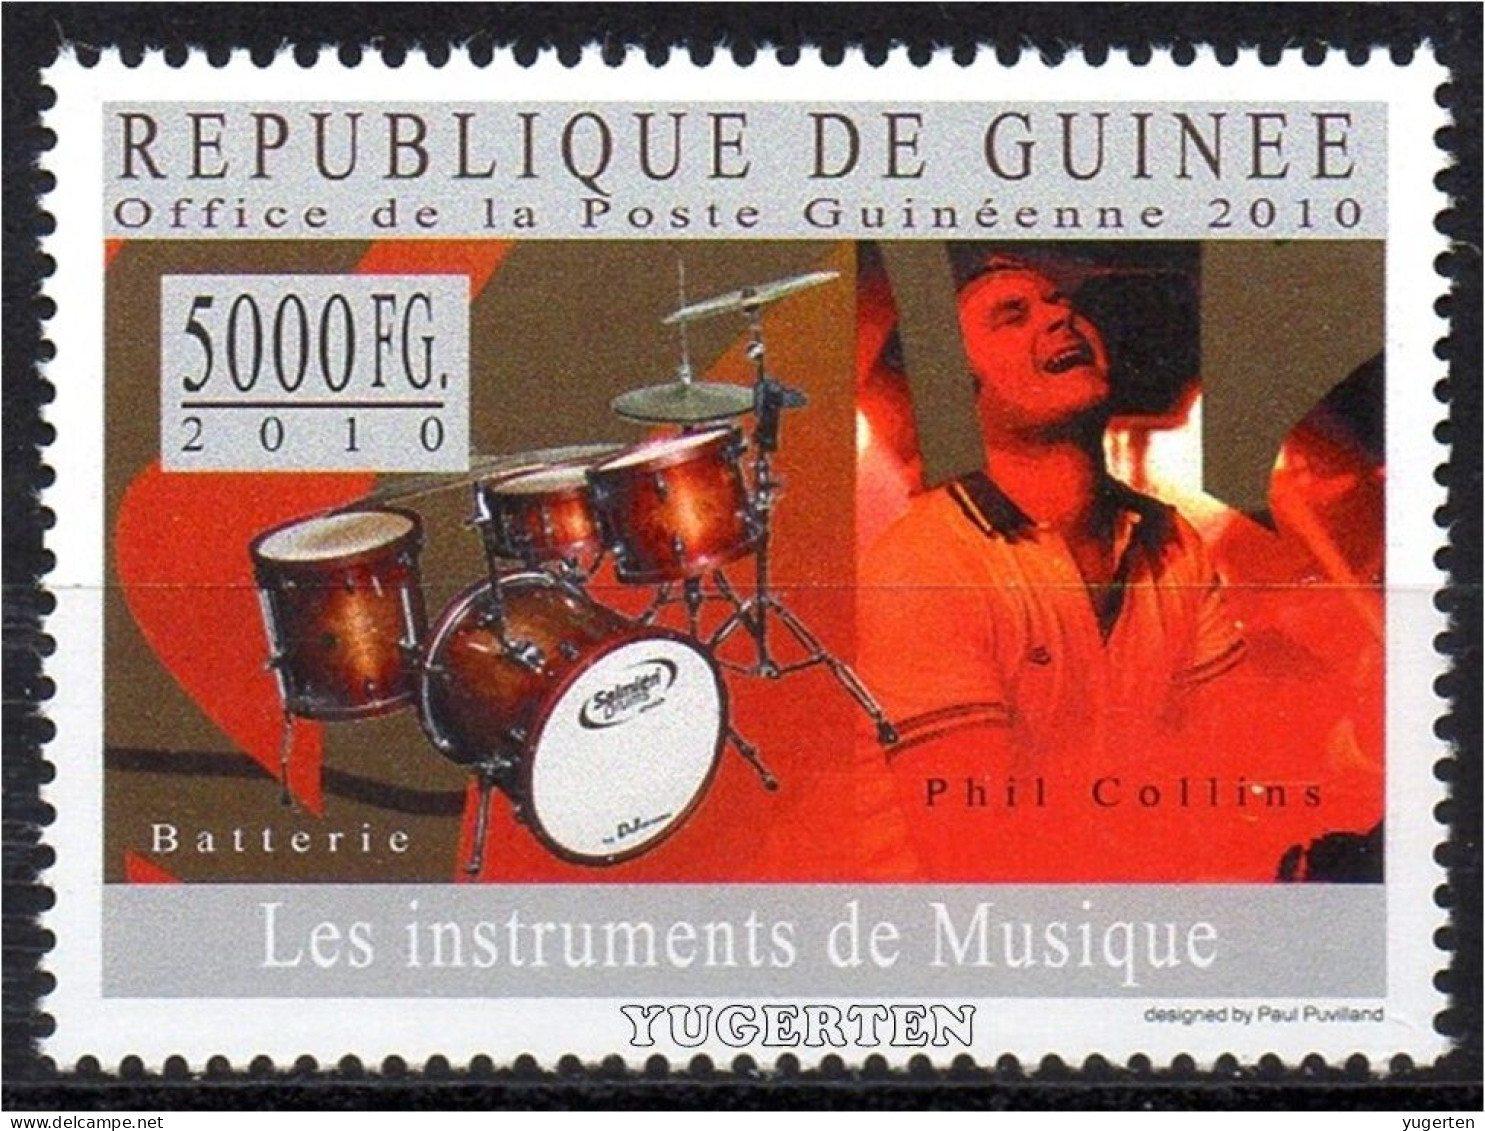 GUINEA 2010 - 1v - MNH - Phil Collins - Music Instruments - Drums - Musique, Muziek, Musik - Musikinstrumente - Musique